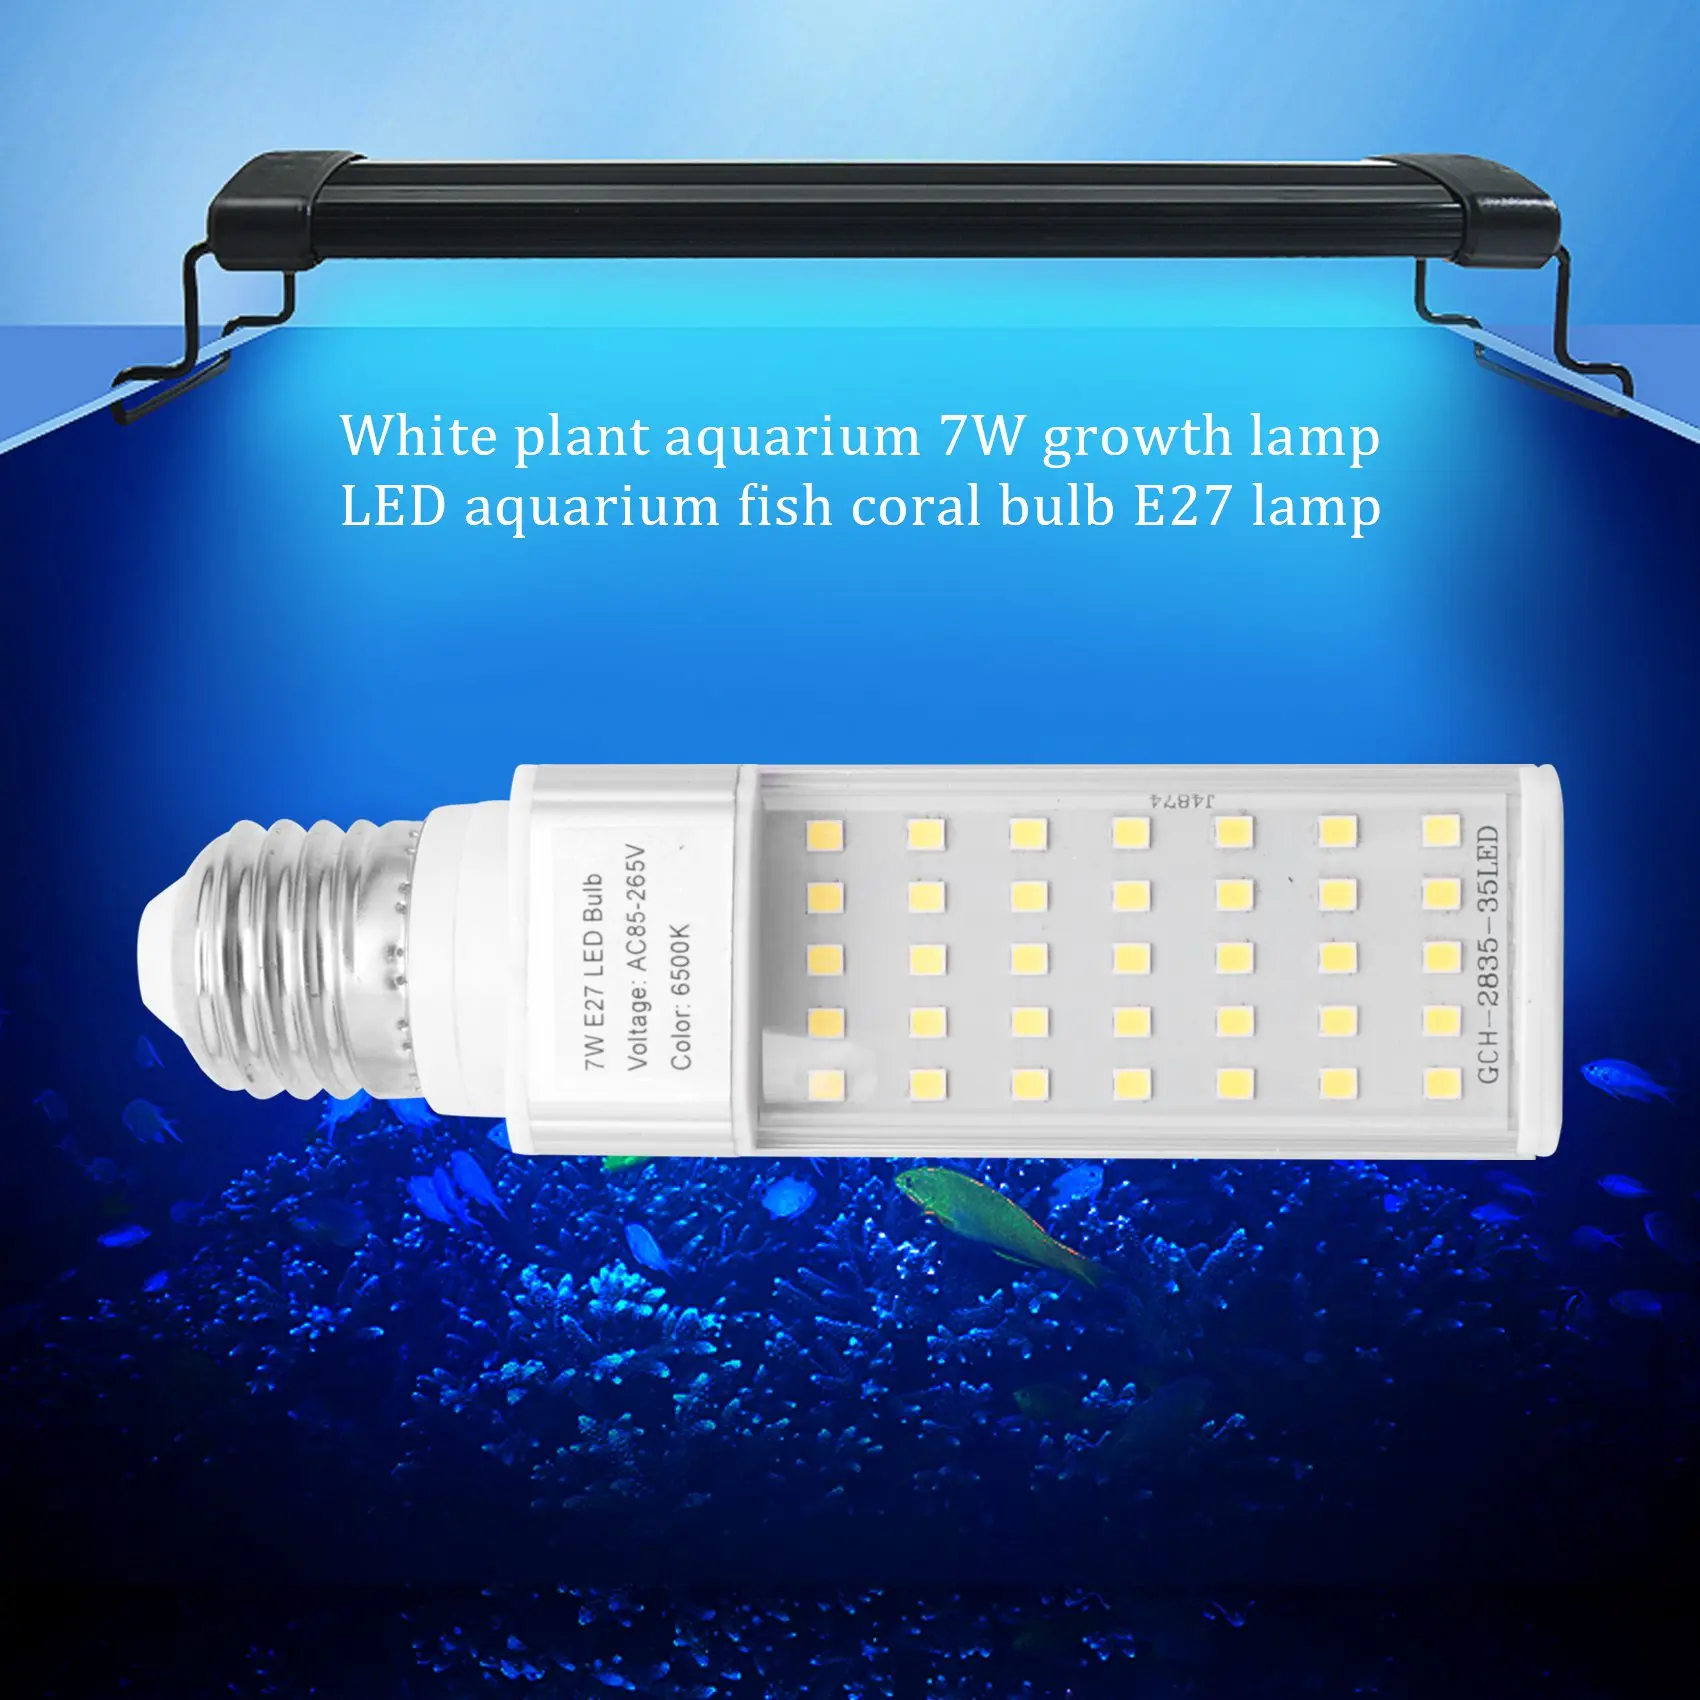 Fishpod White Plant Aquarium 7W Grow Light LED аквариумная рыба коралловая лампа E27